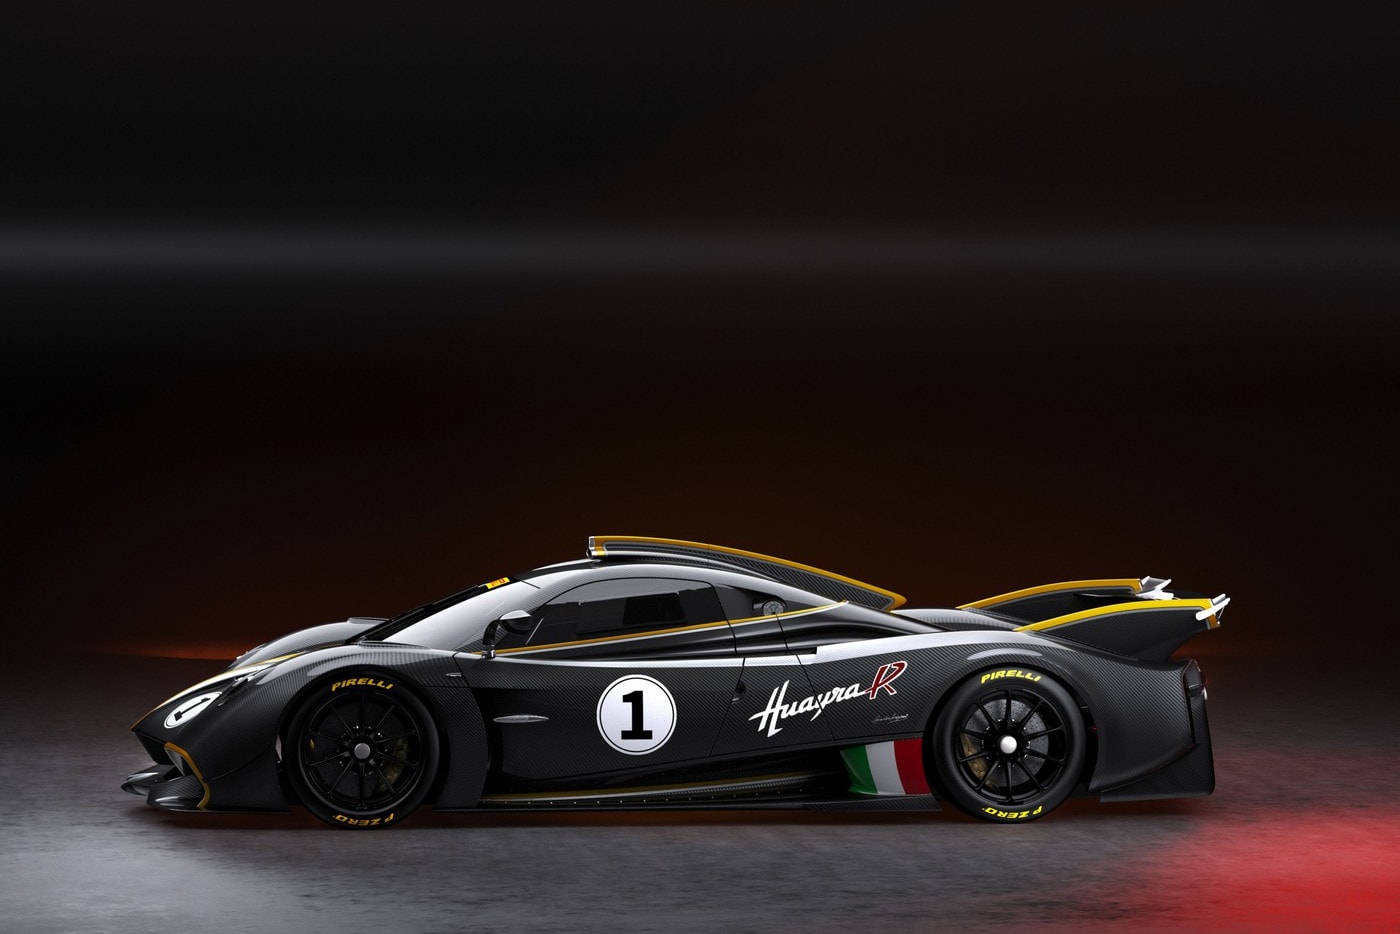 Pagani 發表全球限量 5 輛特殊定製超跑 Huayra Codalunga